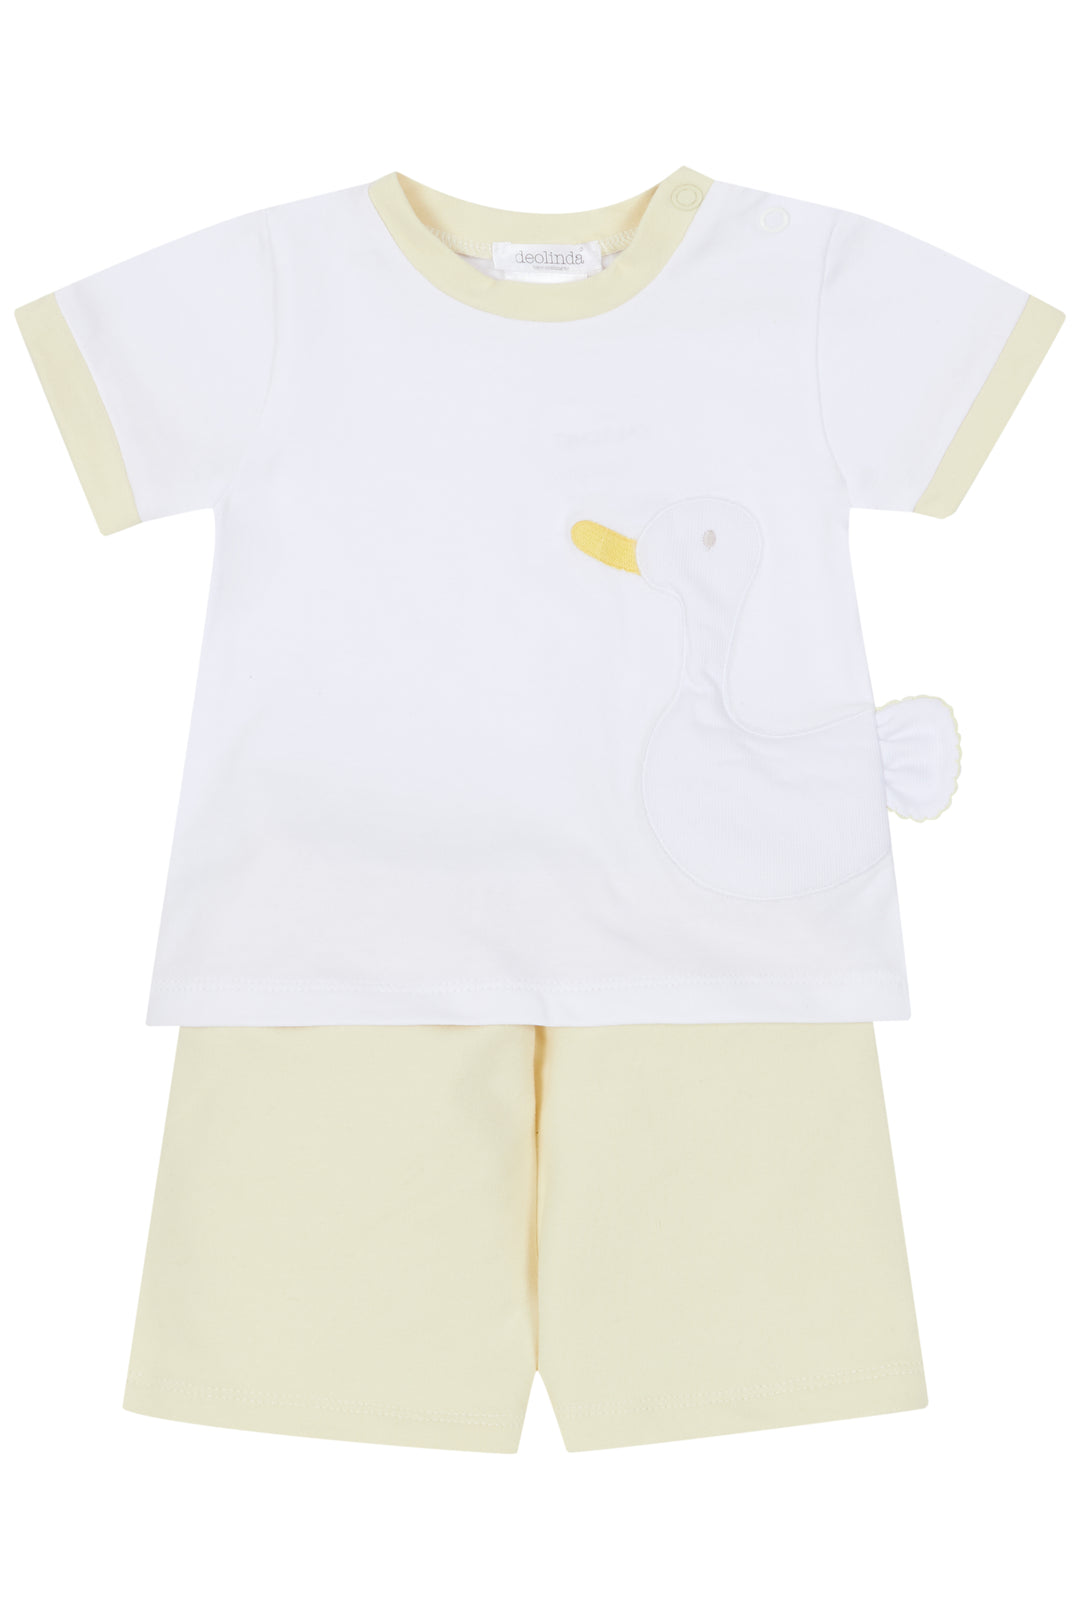 Deolinda "Cyrus" Lemon Duck T-Shirt & Shorts | Millie and John